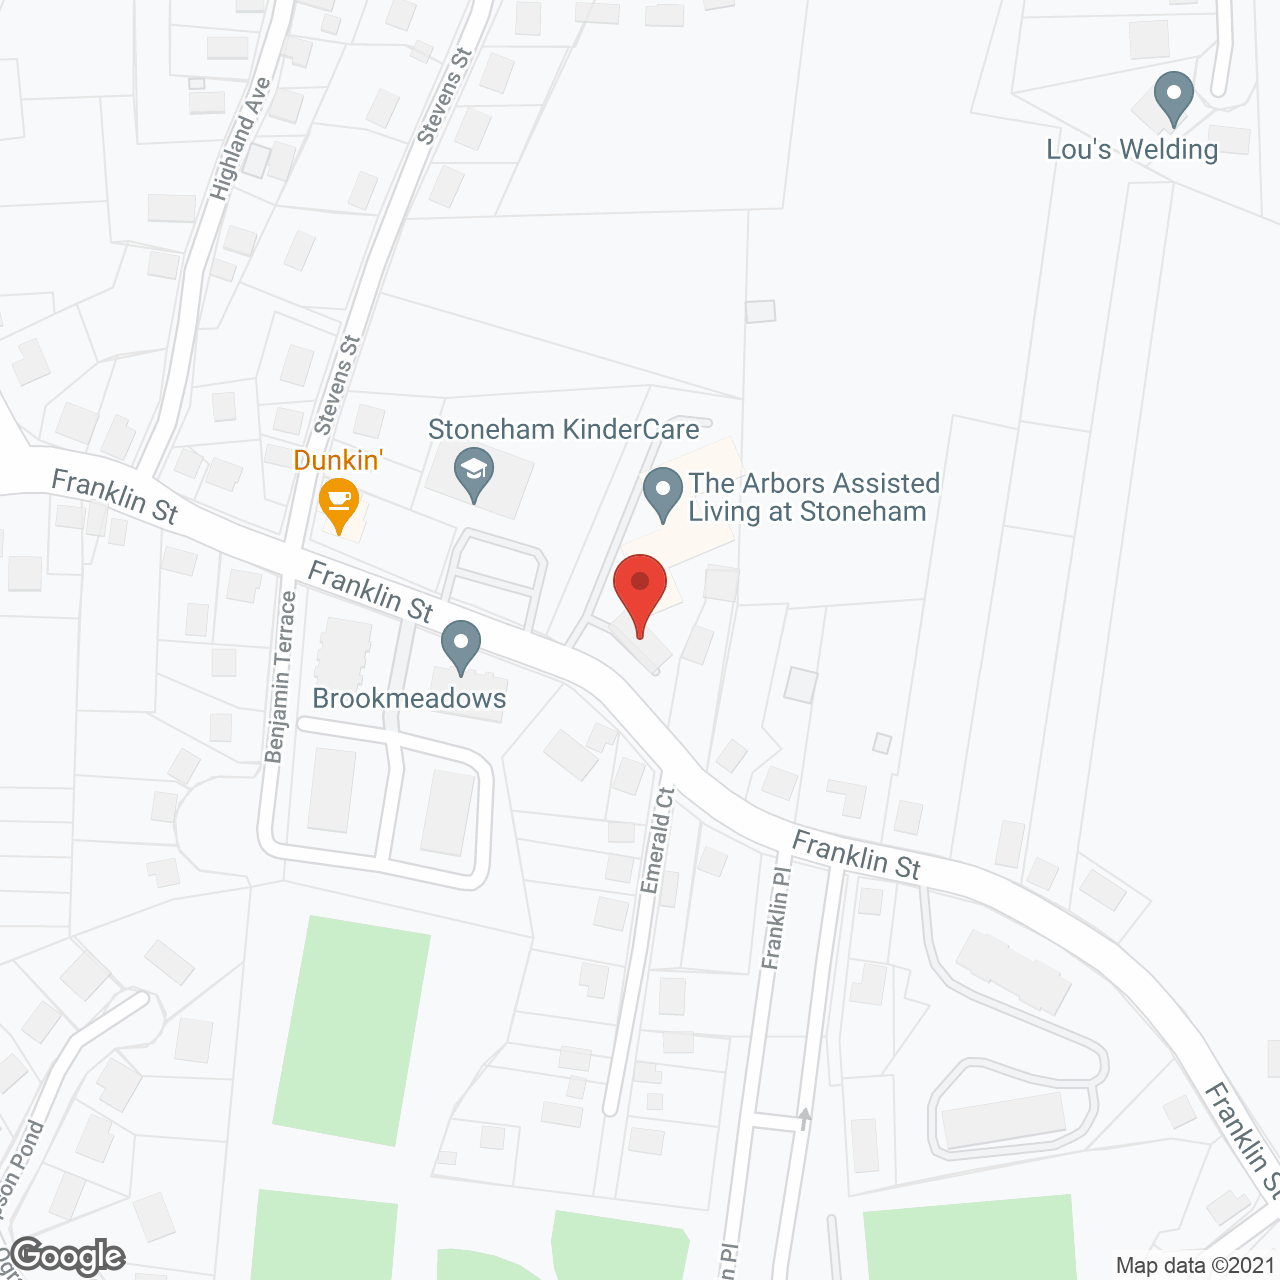 The Arbors at Stoneham in google map